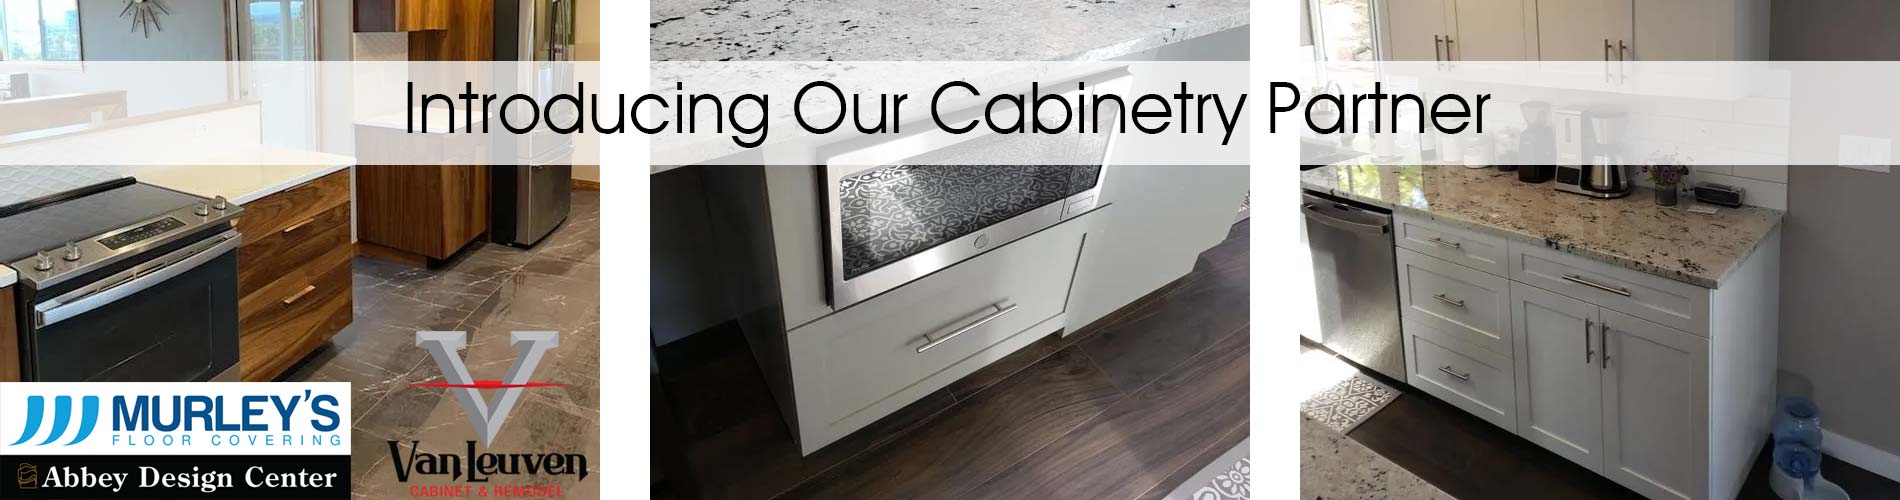 Murley's Floor Covering Custom Cabinetry Partnership with VanLeuvan Cabinets & Remodel